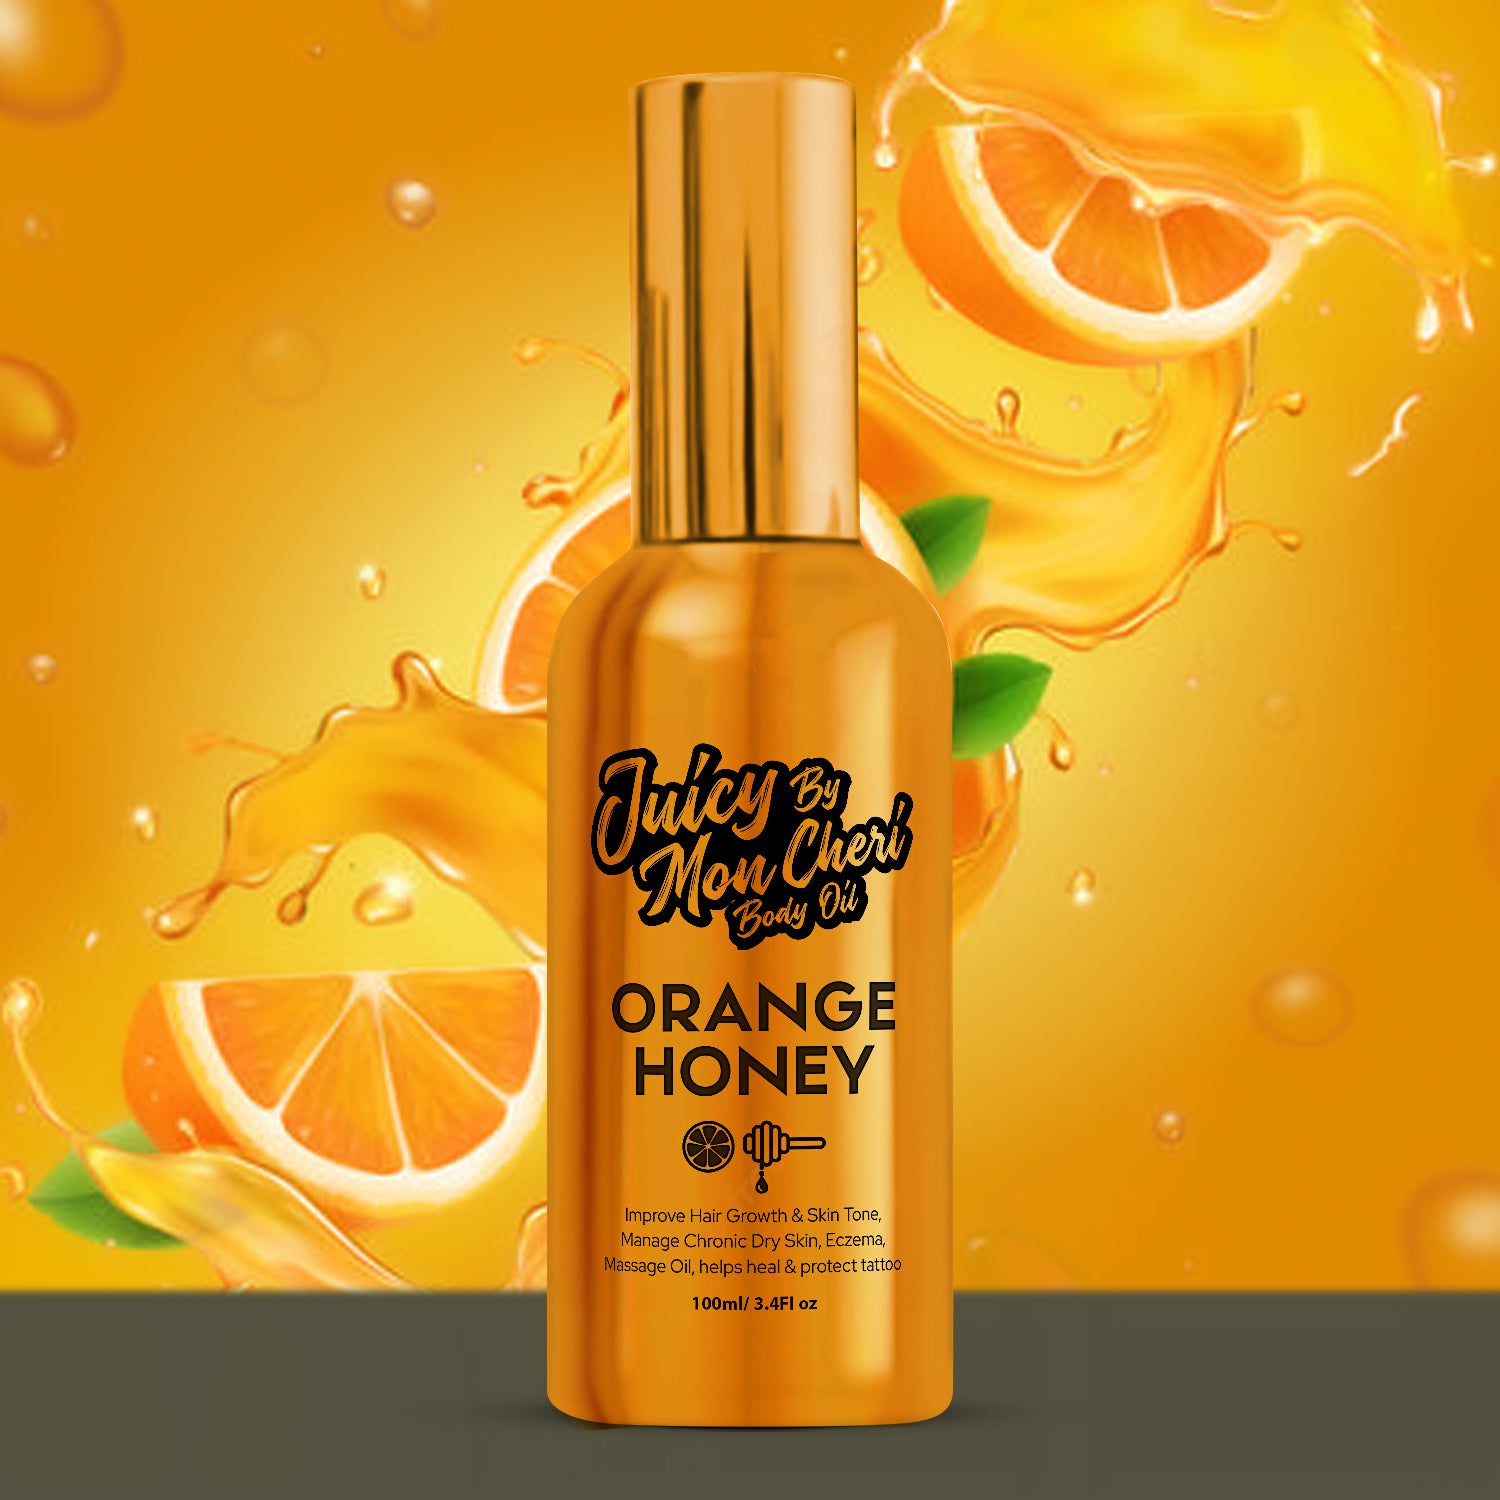 Nourish & Glow with Orange Honey Body Oil by Juicy By Mon Cheri